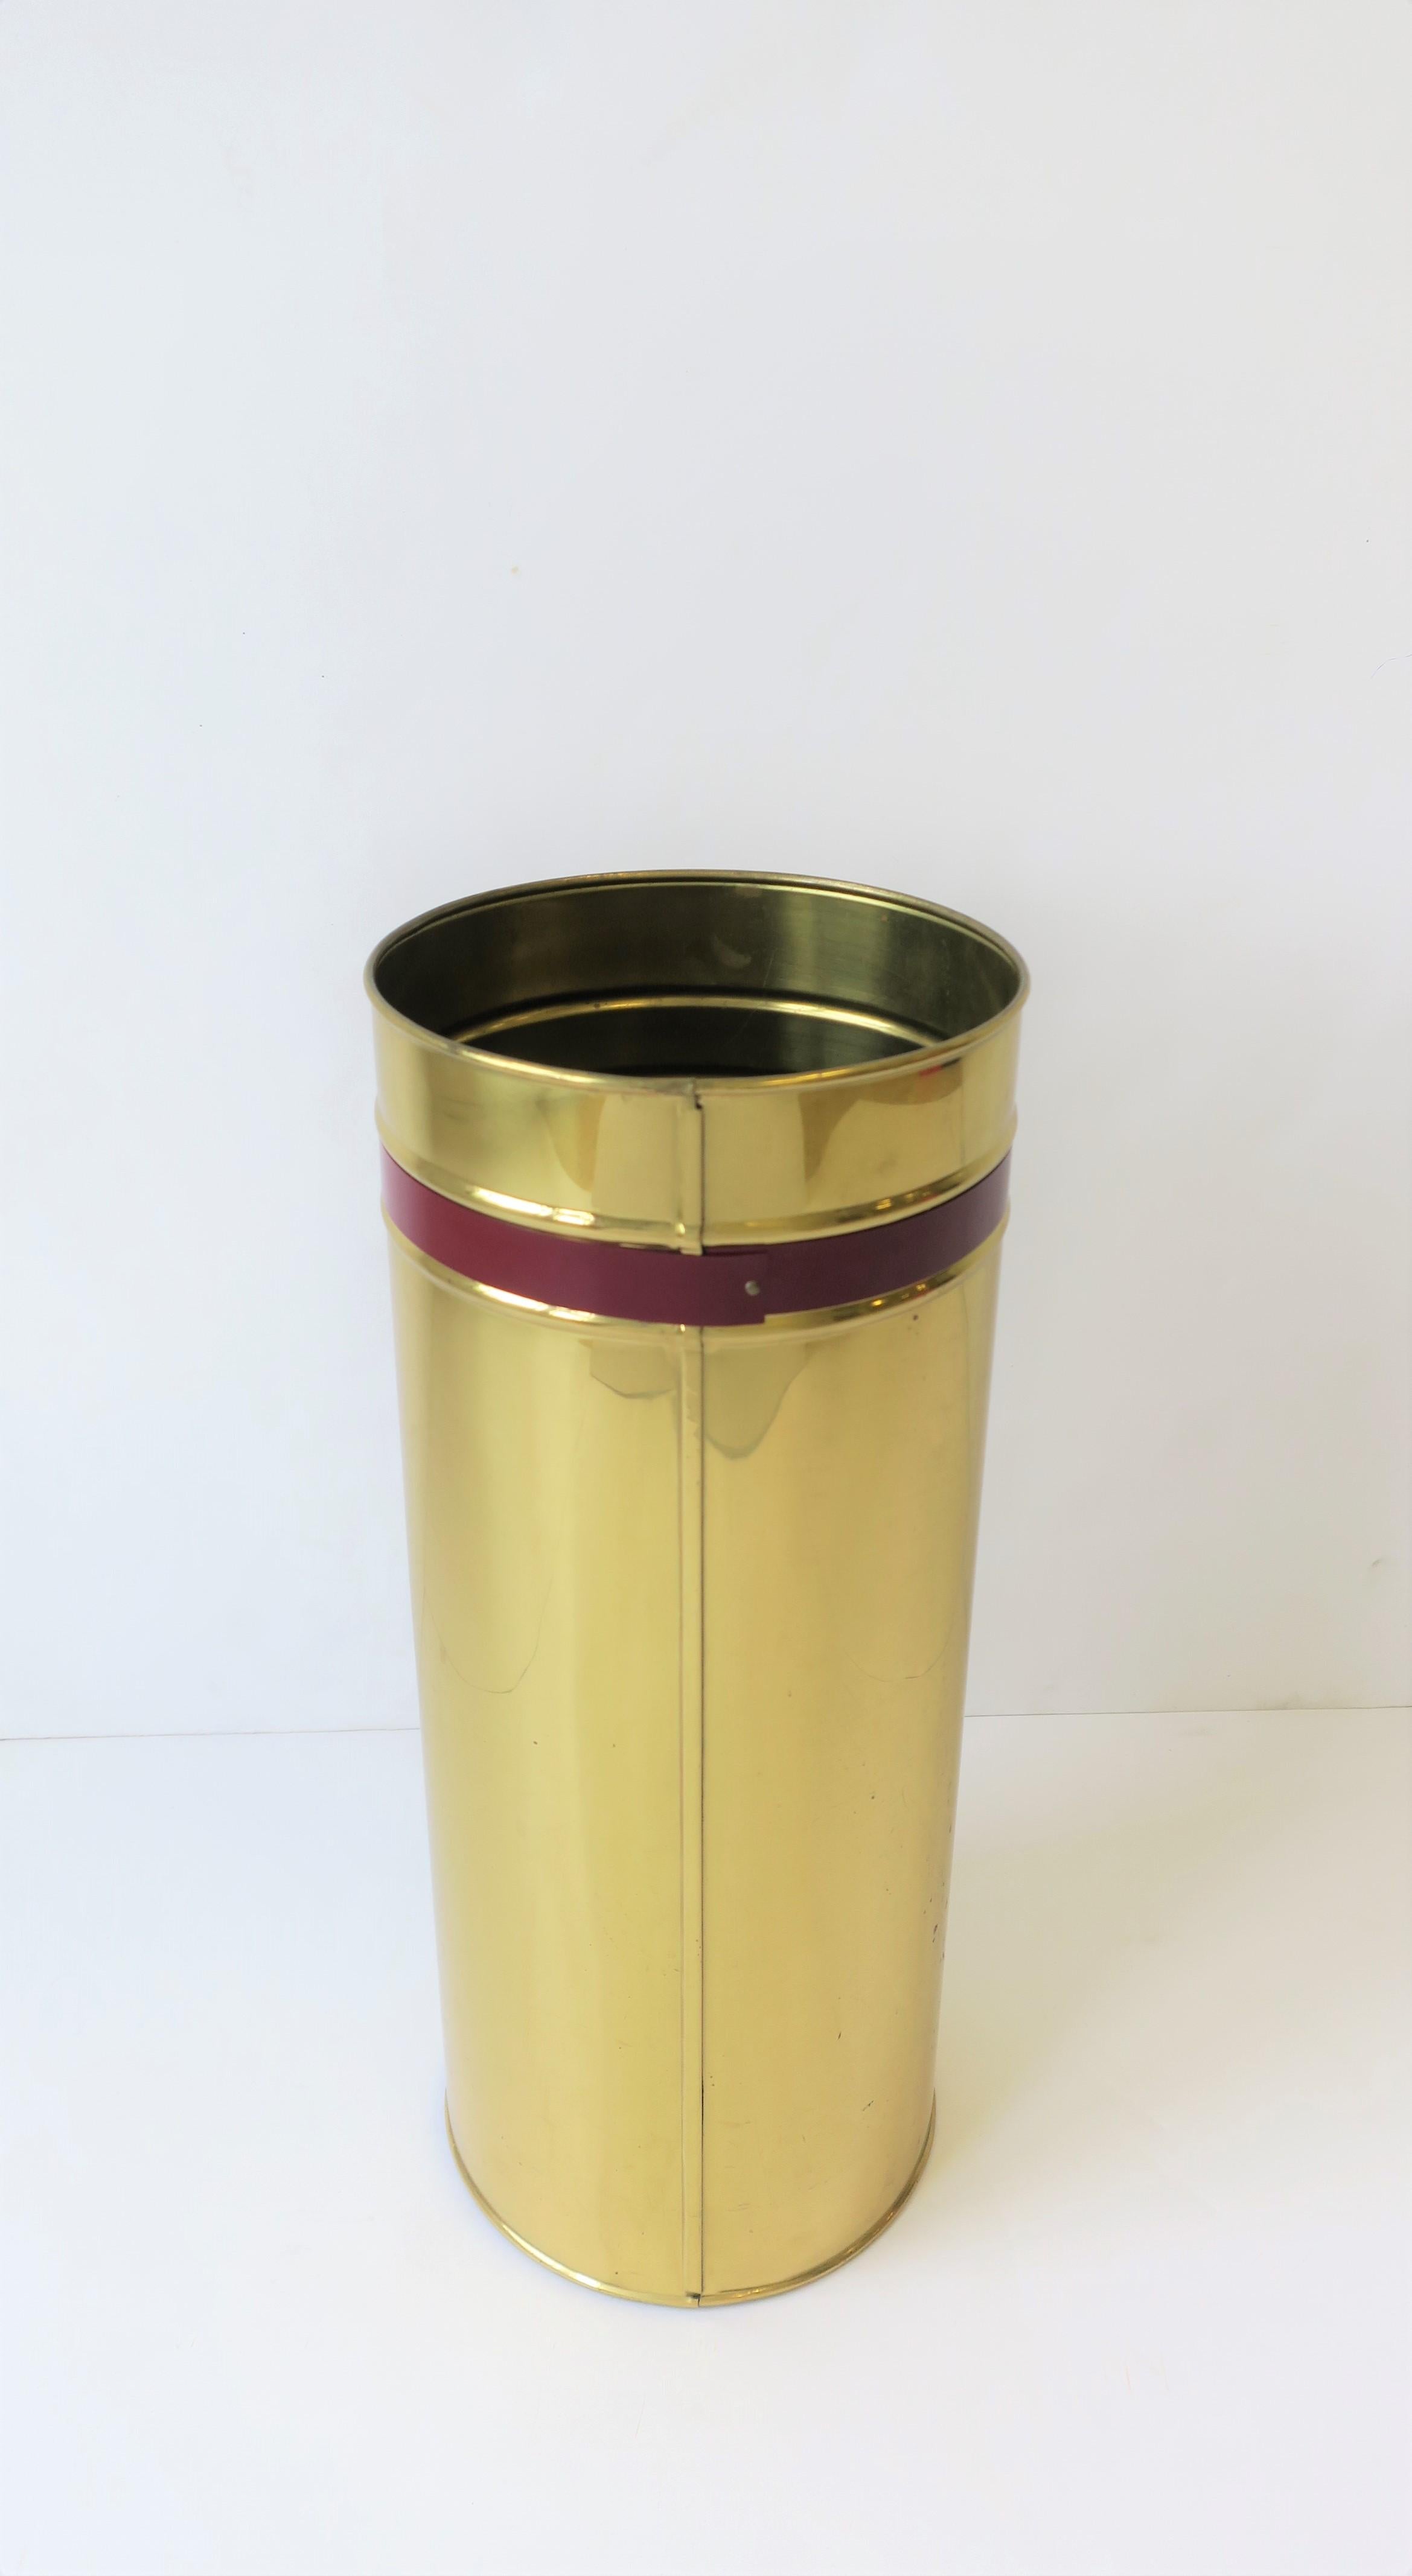 English Brass Umbrella Stand or Holder with Red Burgundy Stripe 2